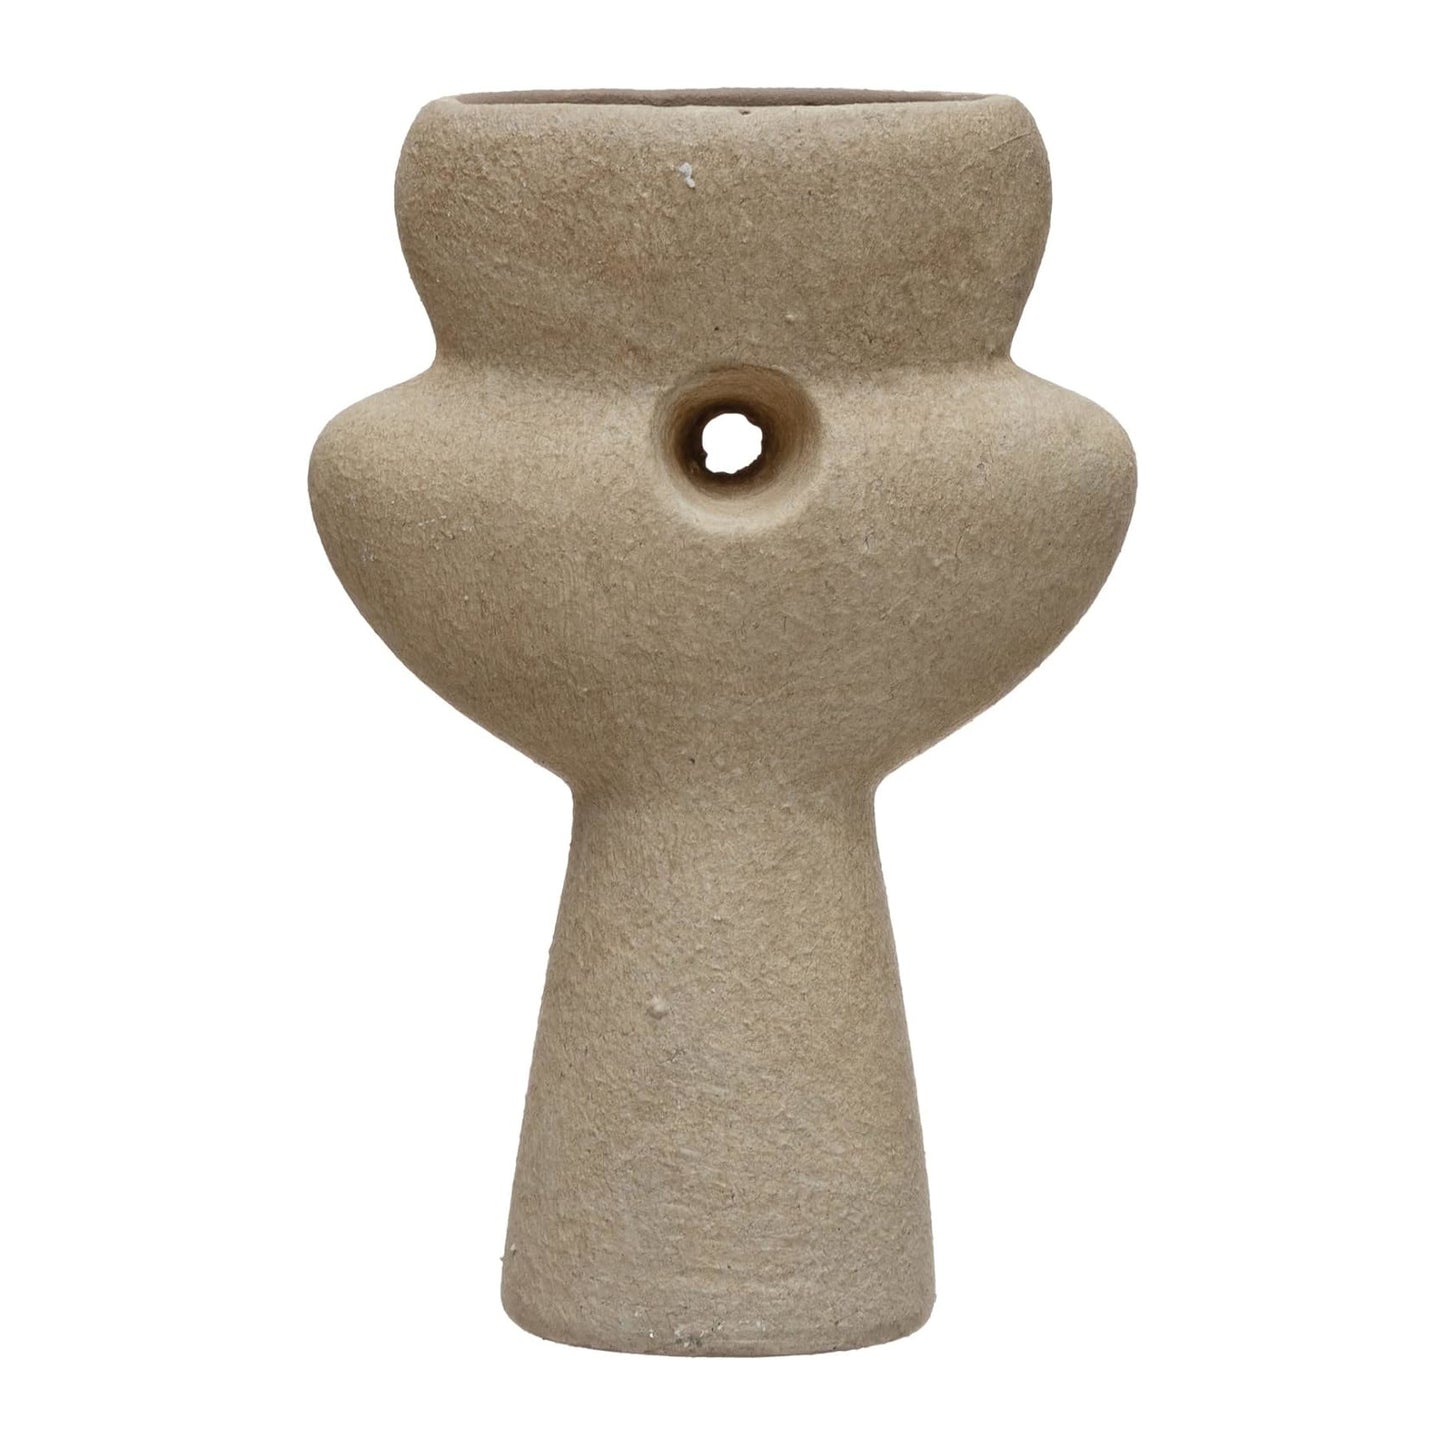 Vase Terracotta Sculptural Sand Finish Cream 6.75" High